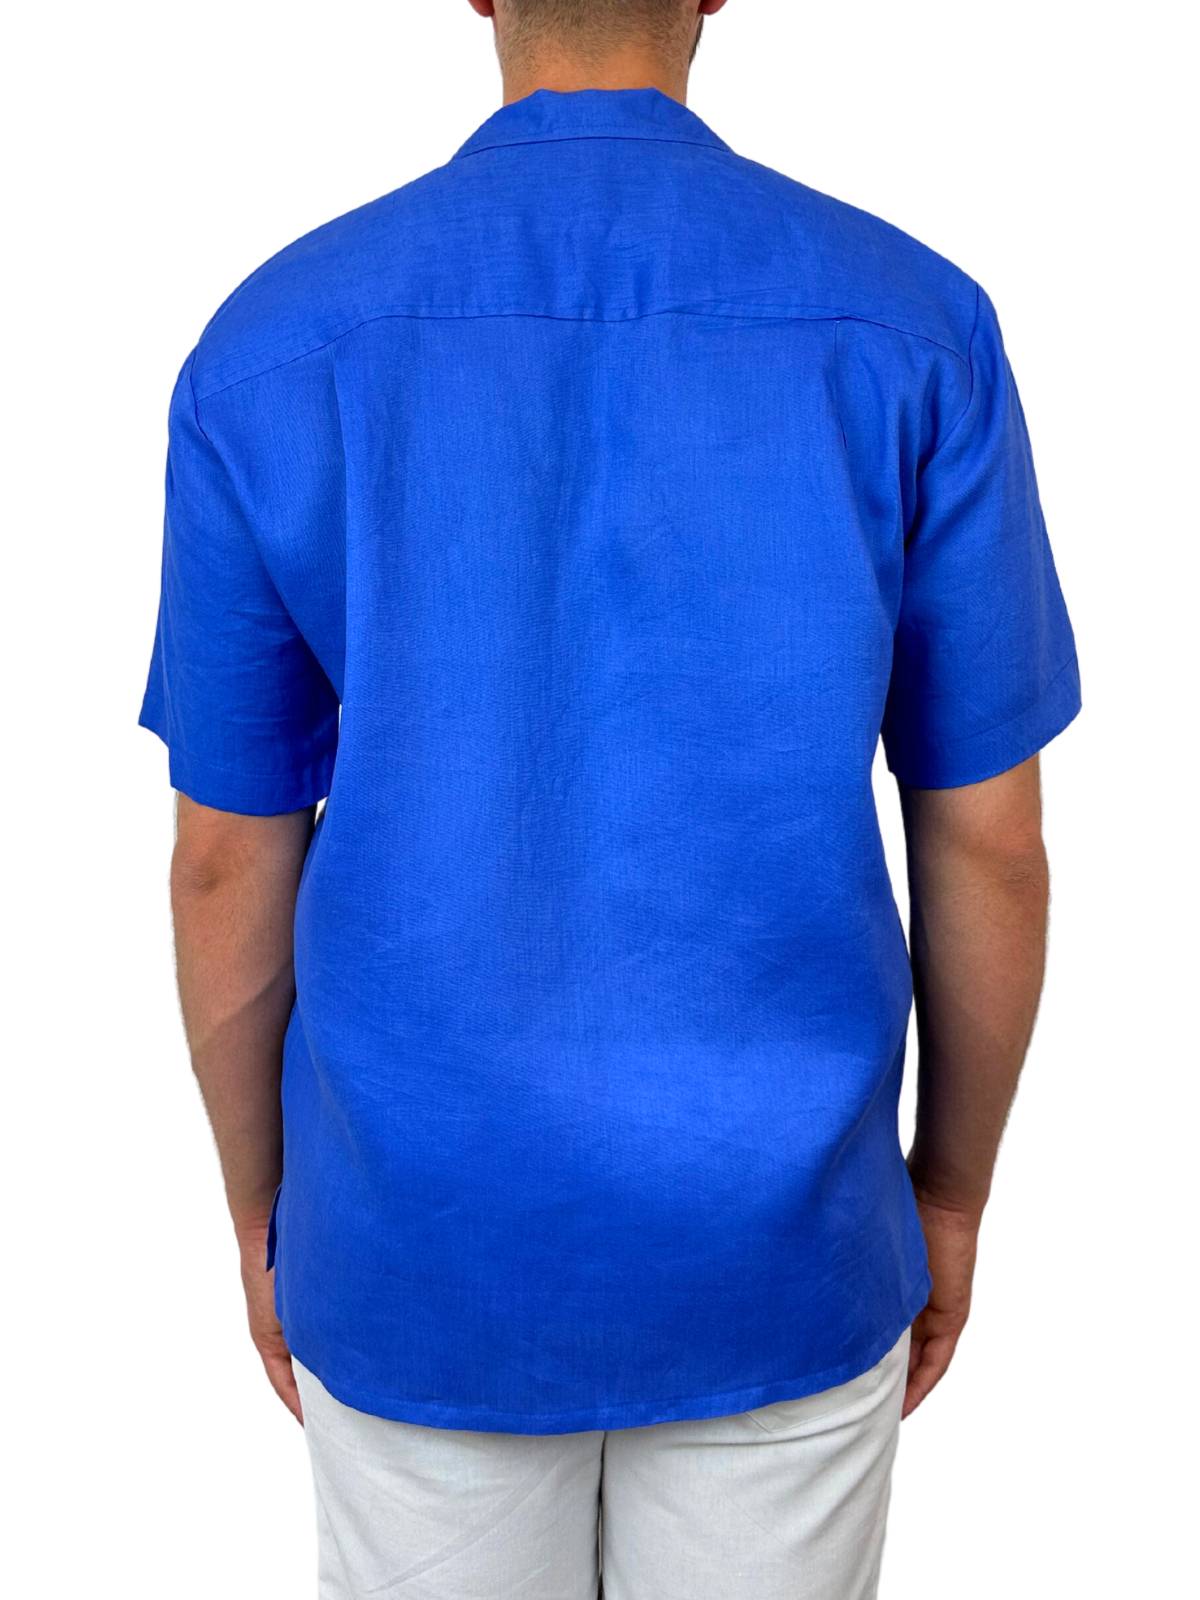 Byron Bay Cornflower Blue Linen S/S Shirt